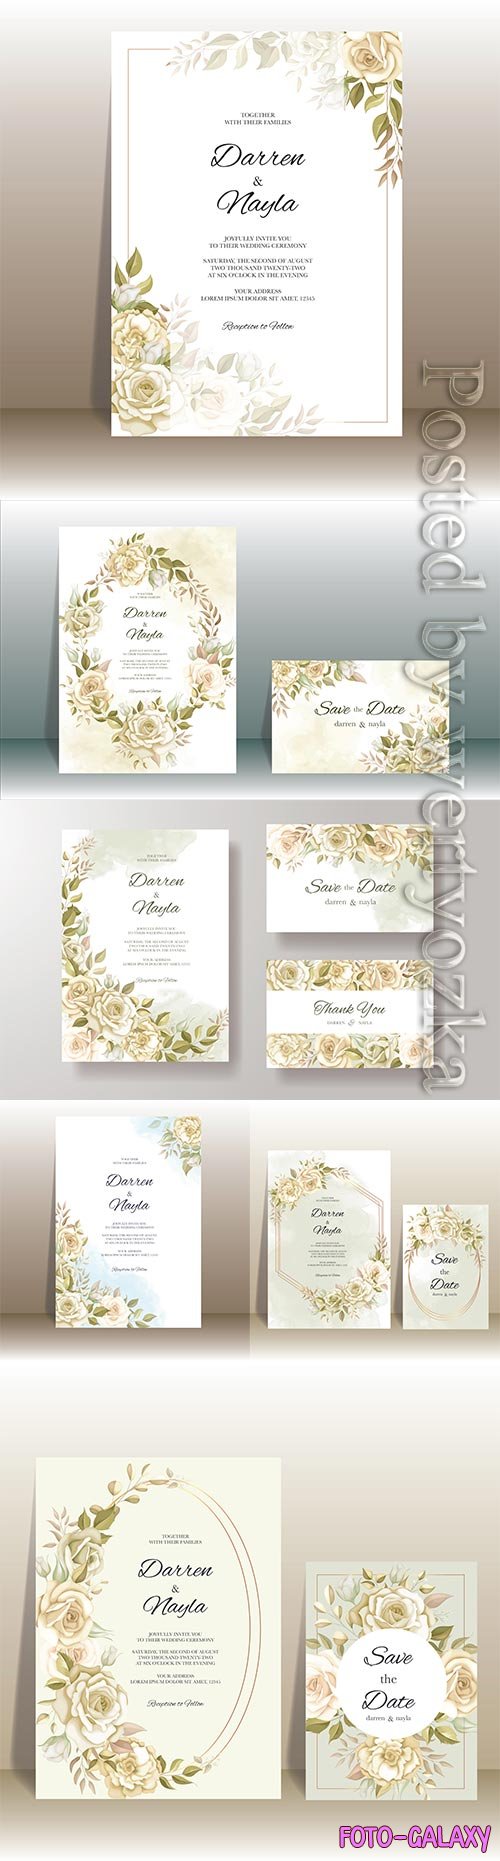 Elegant wedding invitation card with rose decoration